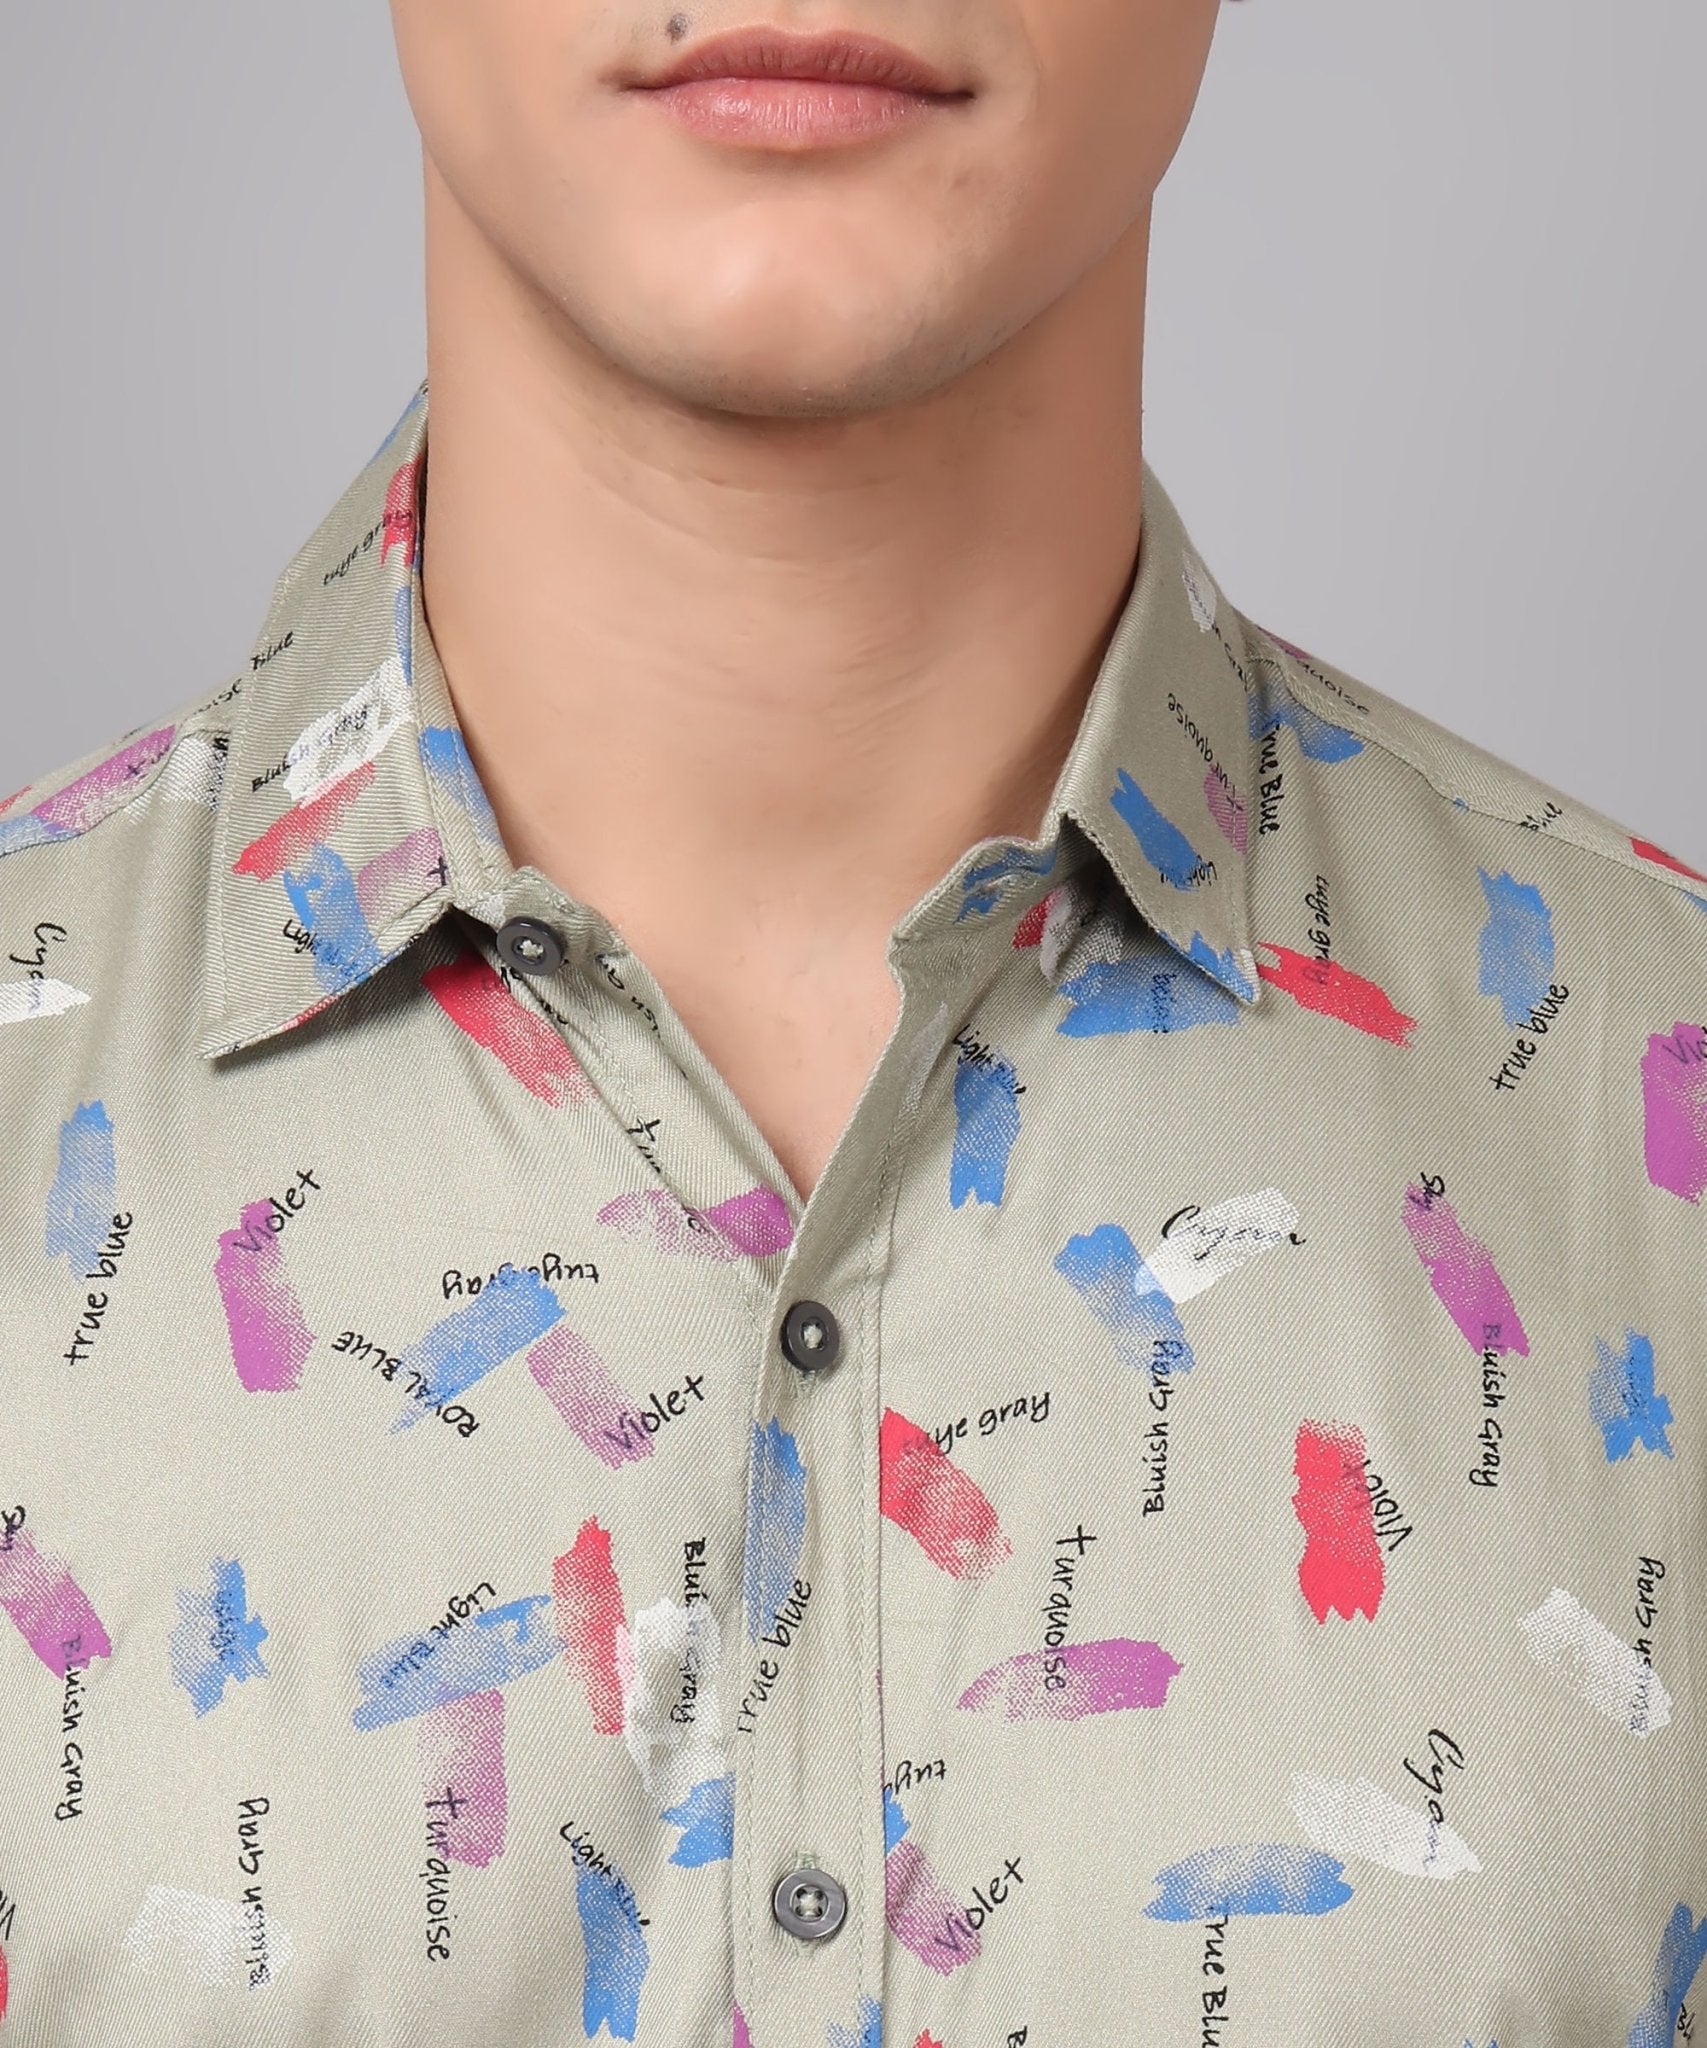 Trybuy Premium Classy Ravishing Cotton Casual Multi Colored Printed Shirt for Men - TryBuy® USA🇺🇸